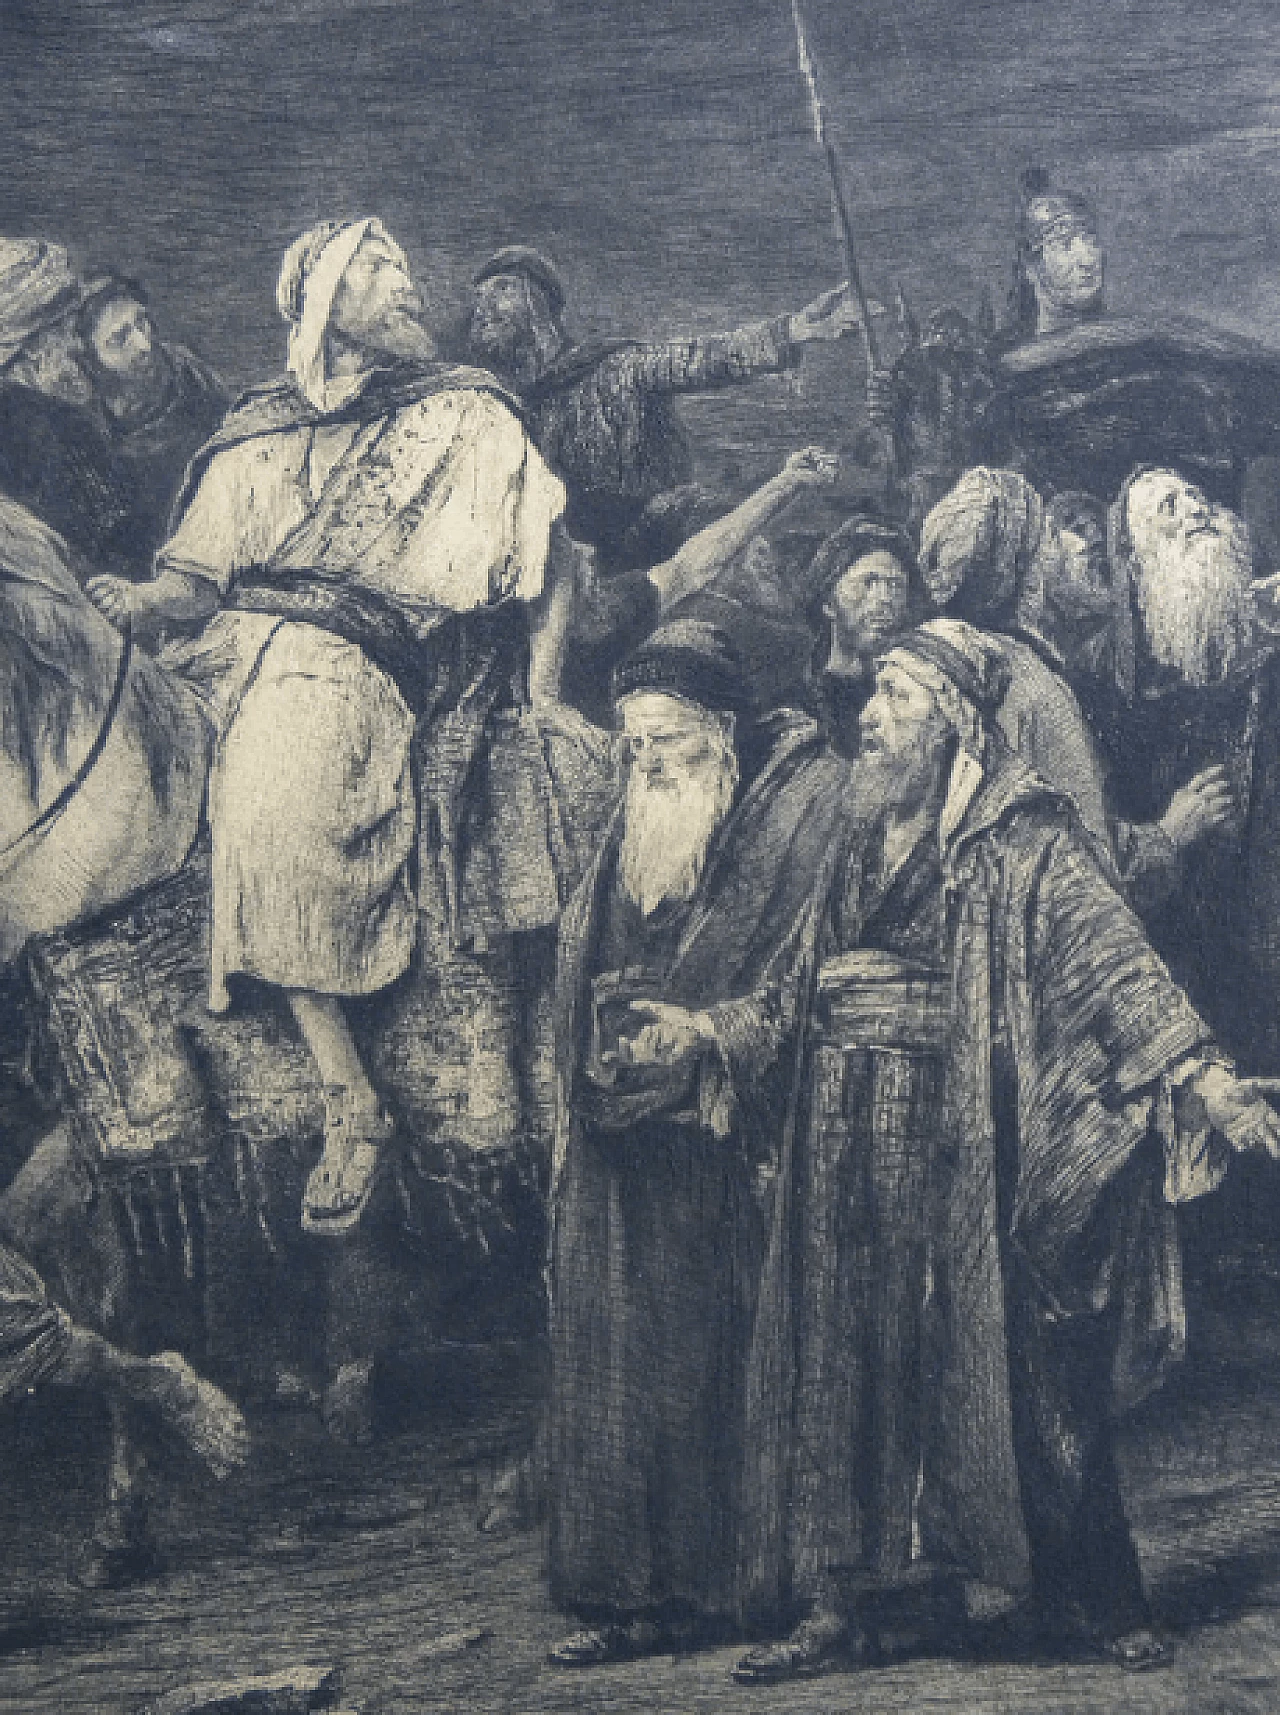 Karl Köpping and Mihály Munkácsy, Golgotha, etching, 1888 14